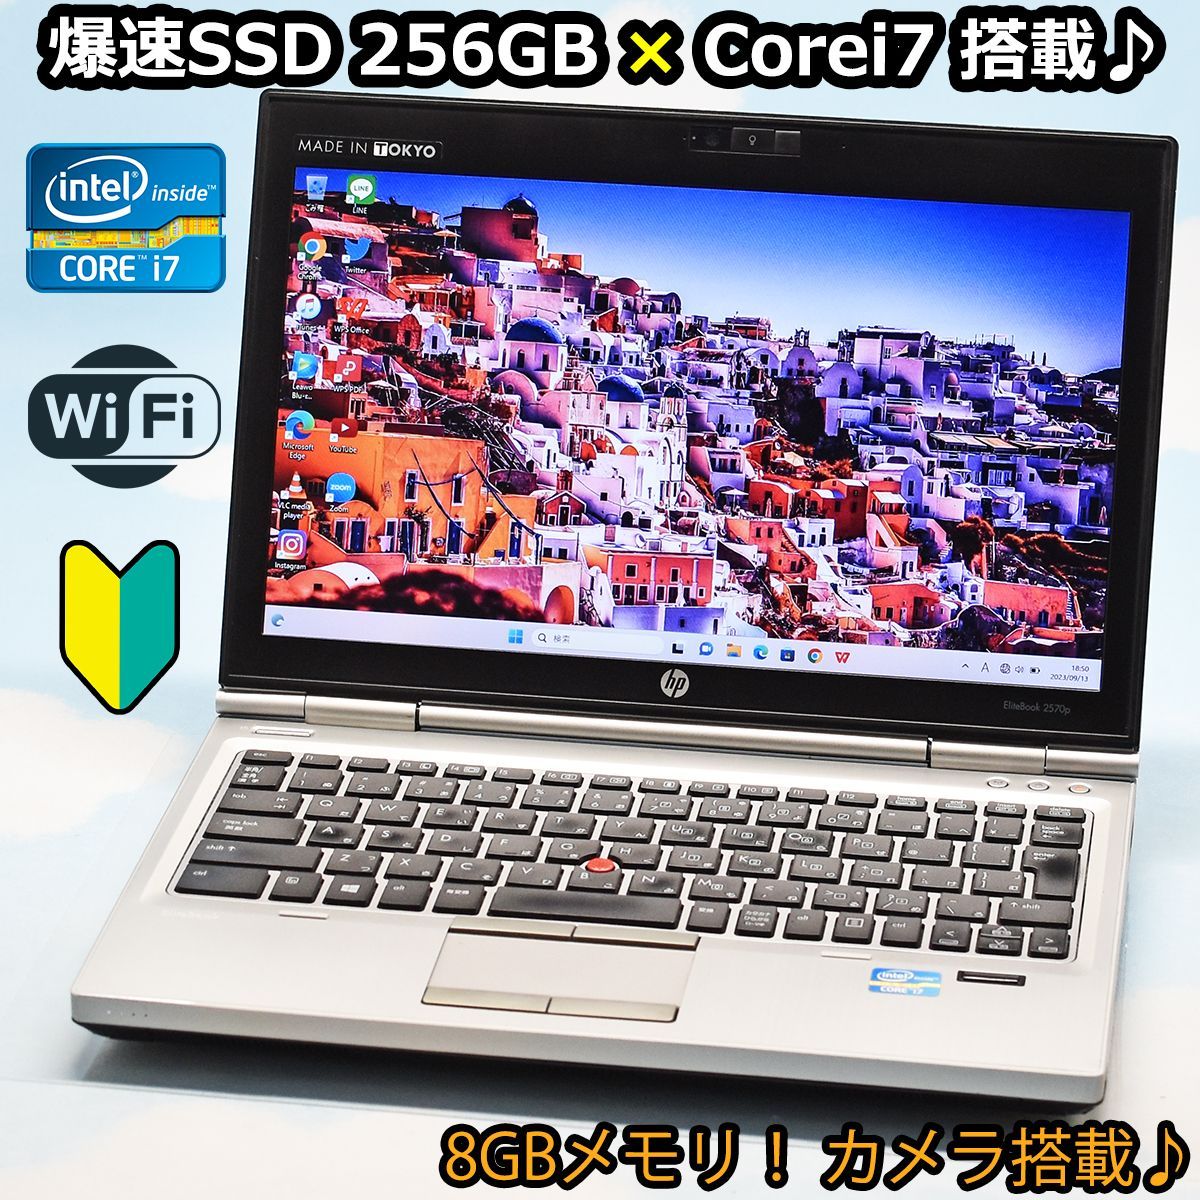 hp Corei7、256GB SSD、8GBメモリ、カメラ、WiFi Windows11搭載